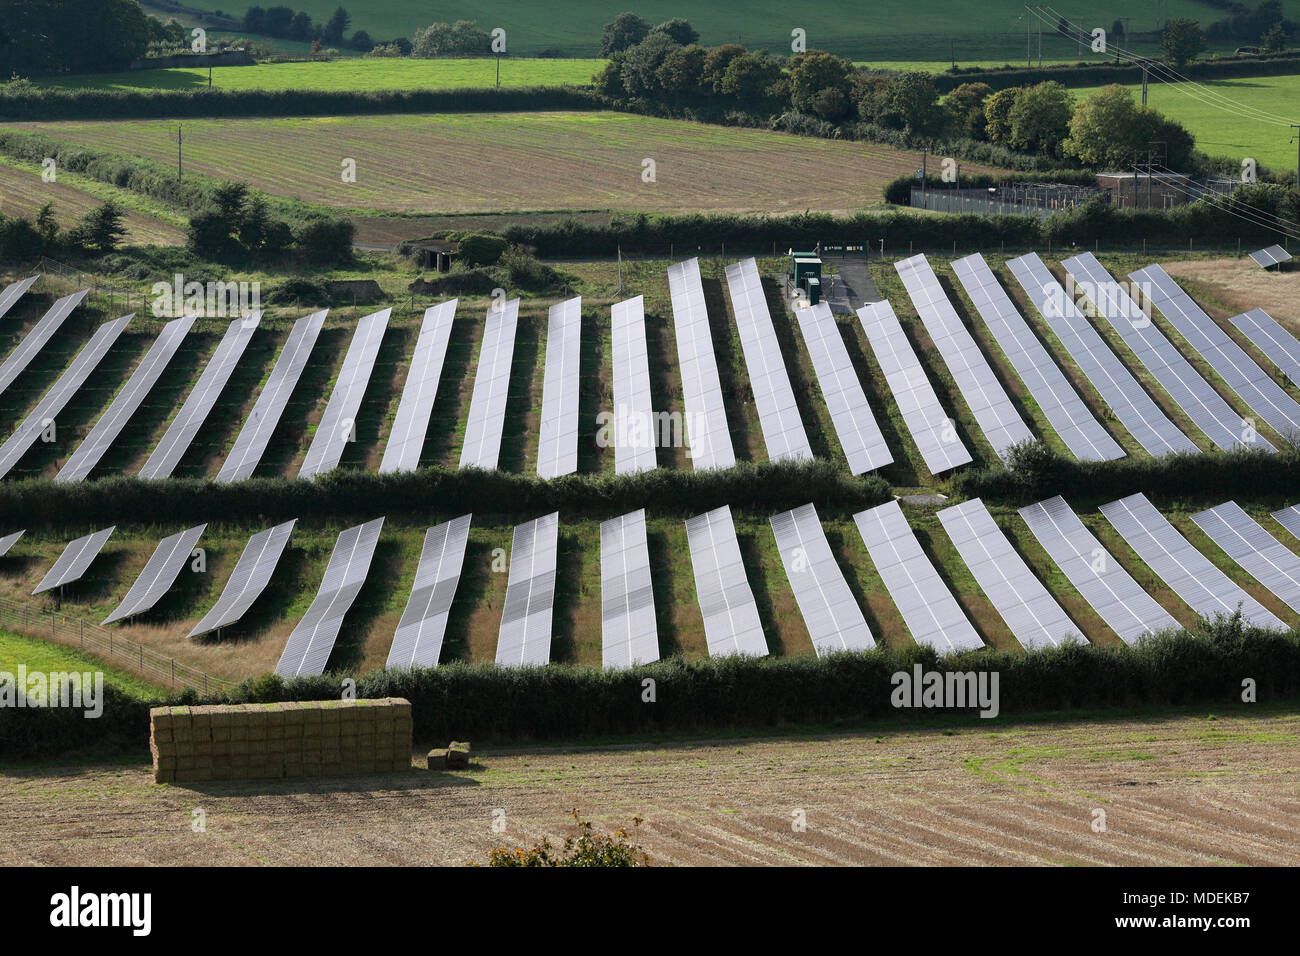 Looking down on the photovoltaic arrays that comprise the Milborne Port Solar Farm, near Milborne Port, Somerset. Stock Photo